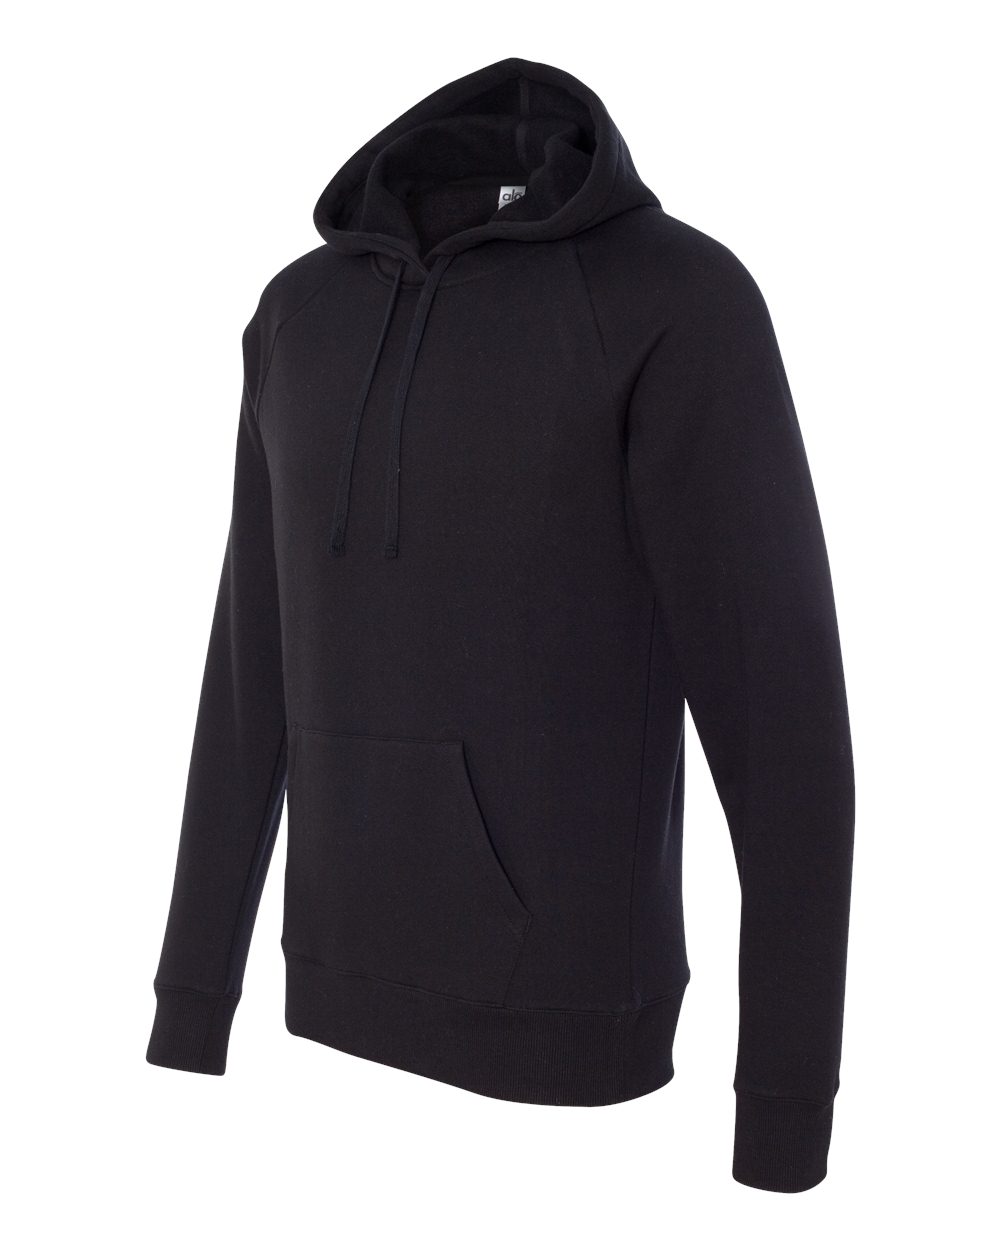 alo - Unisex Performance Fleece Hooded Pullover $23.01